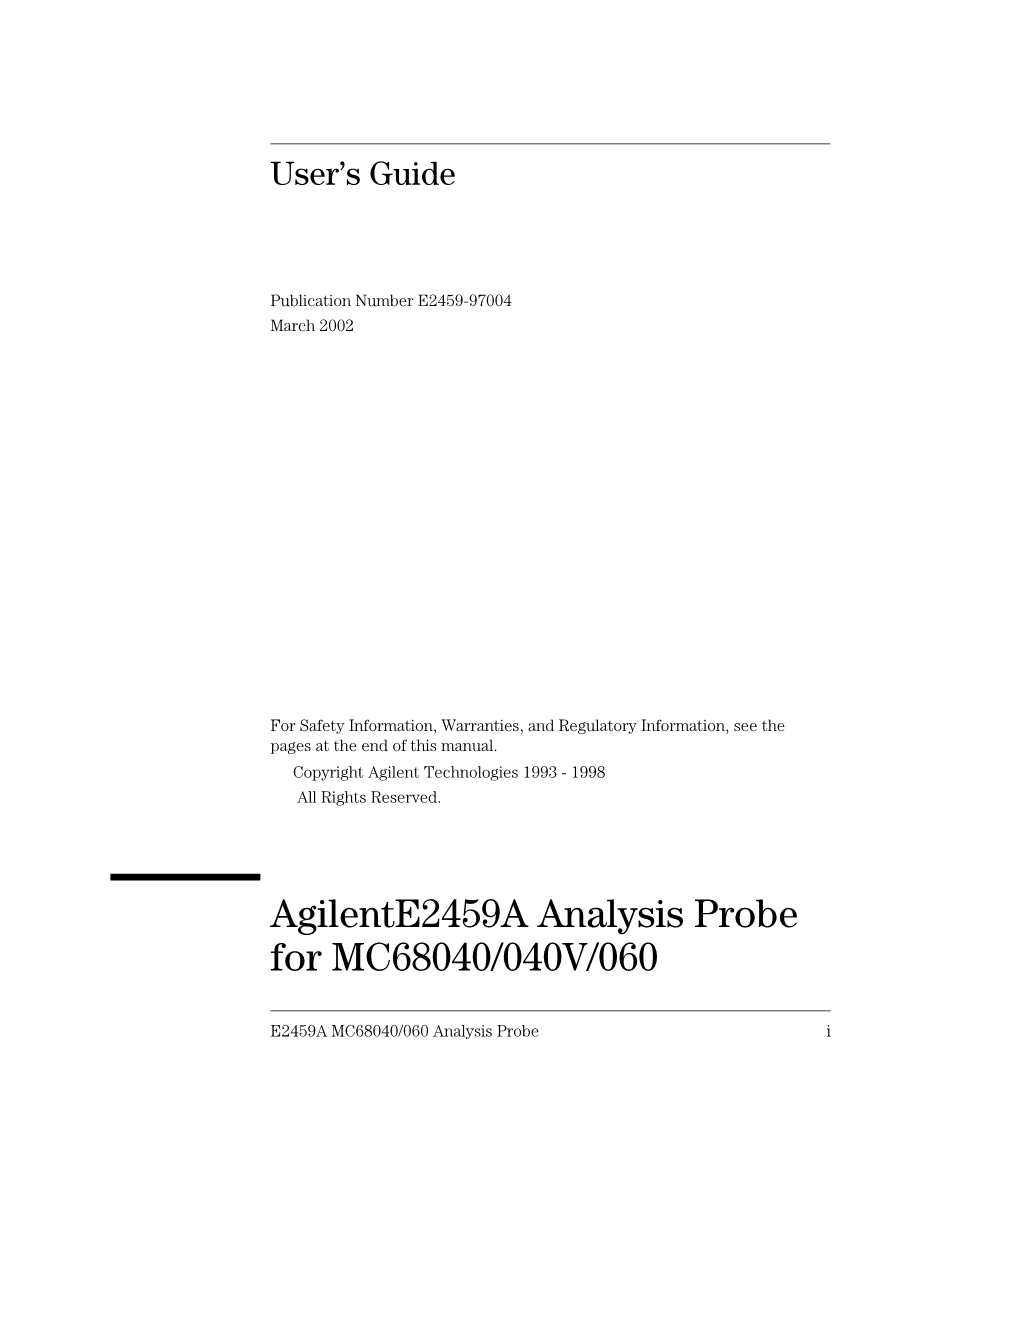 Agilent E2459A Analysis Probe for MC68040/040V/060 User's Guide